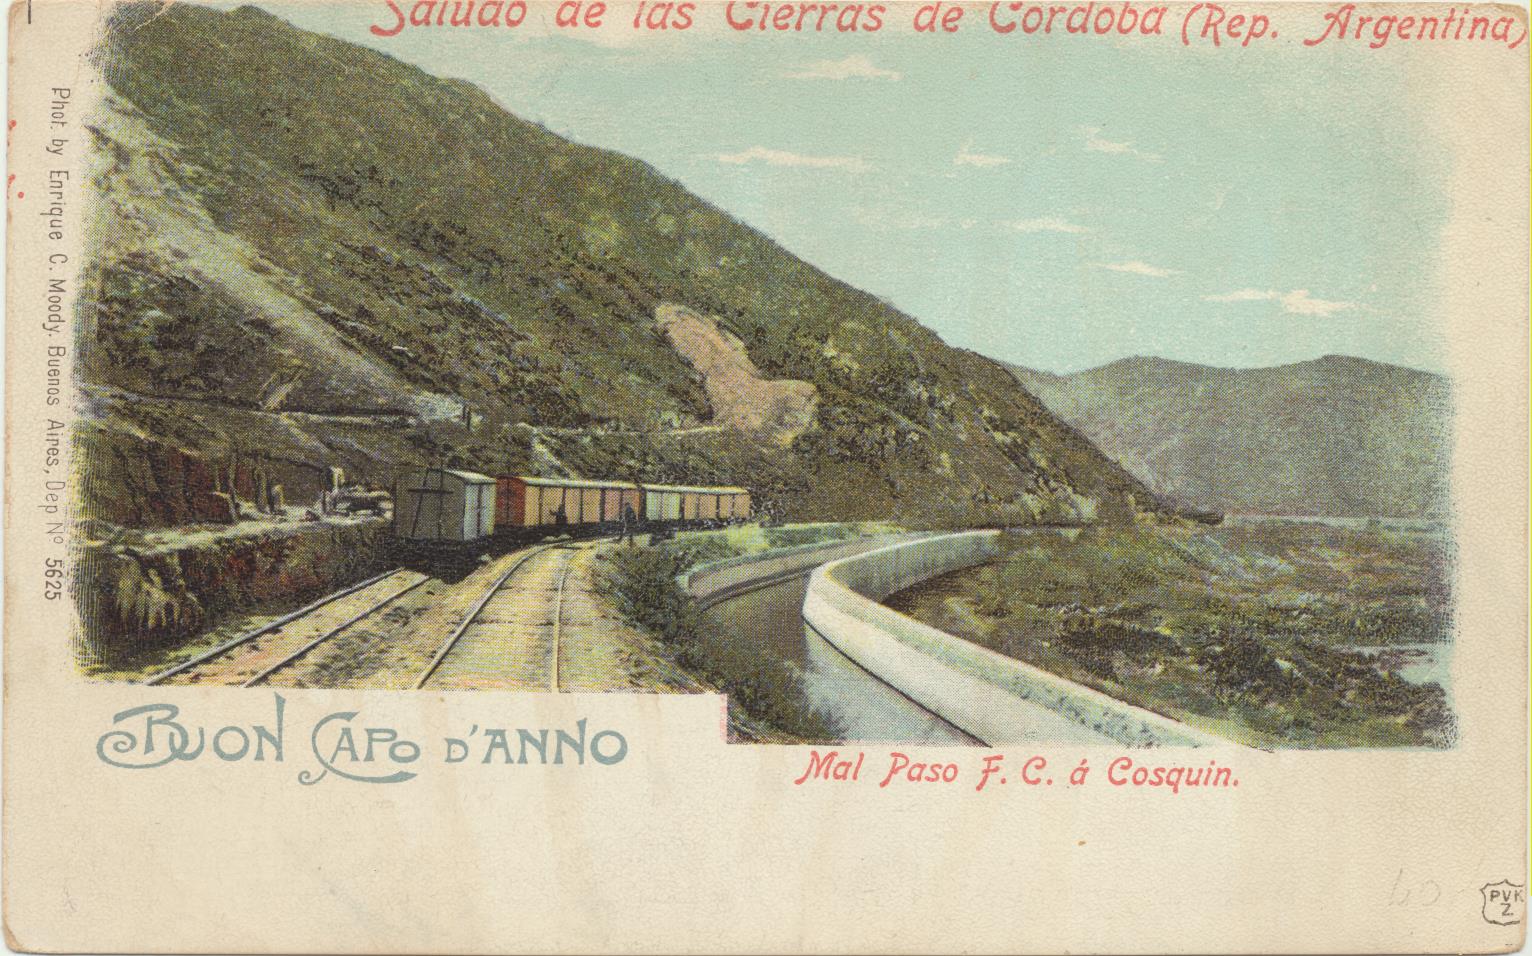 Argentina. Postal. Saludo de las Sierras de Córdoba. Mal Paso F. C. a Cosquin. Anterior a 1905